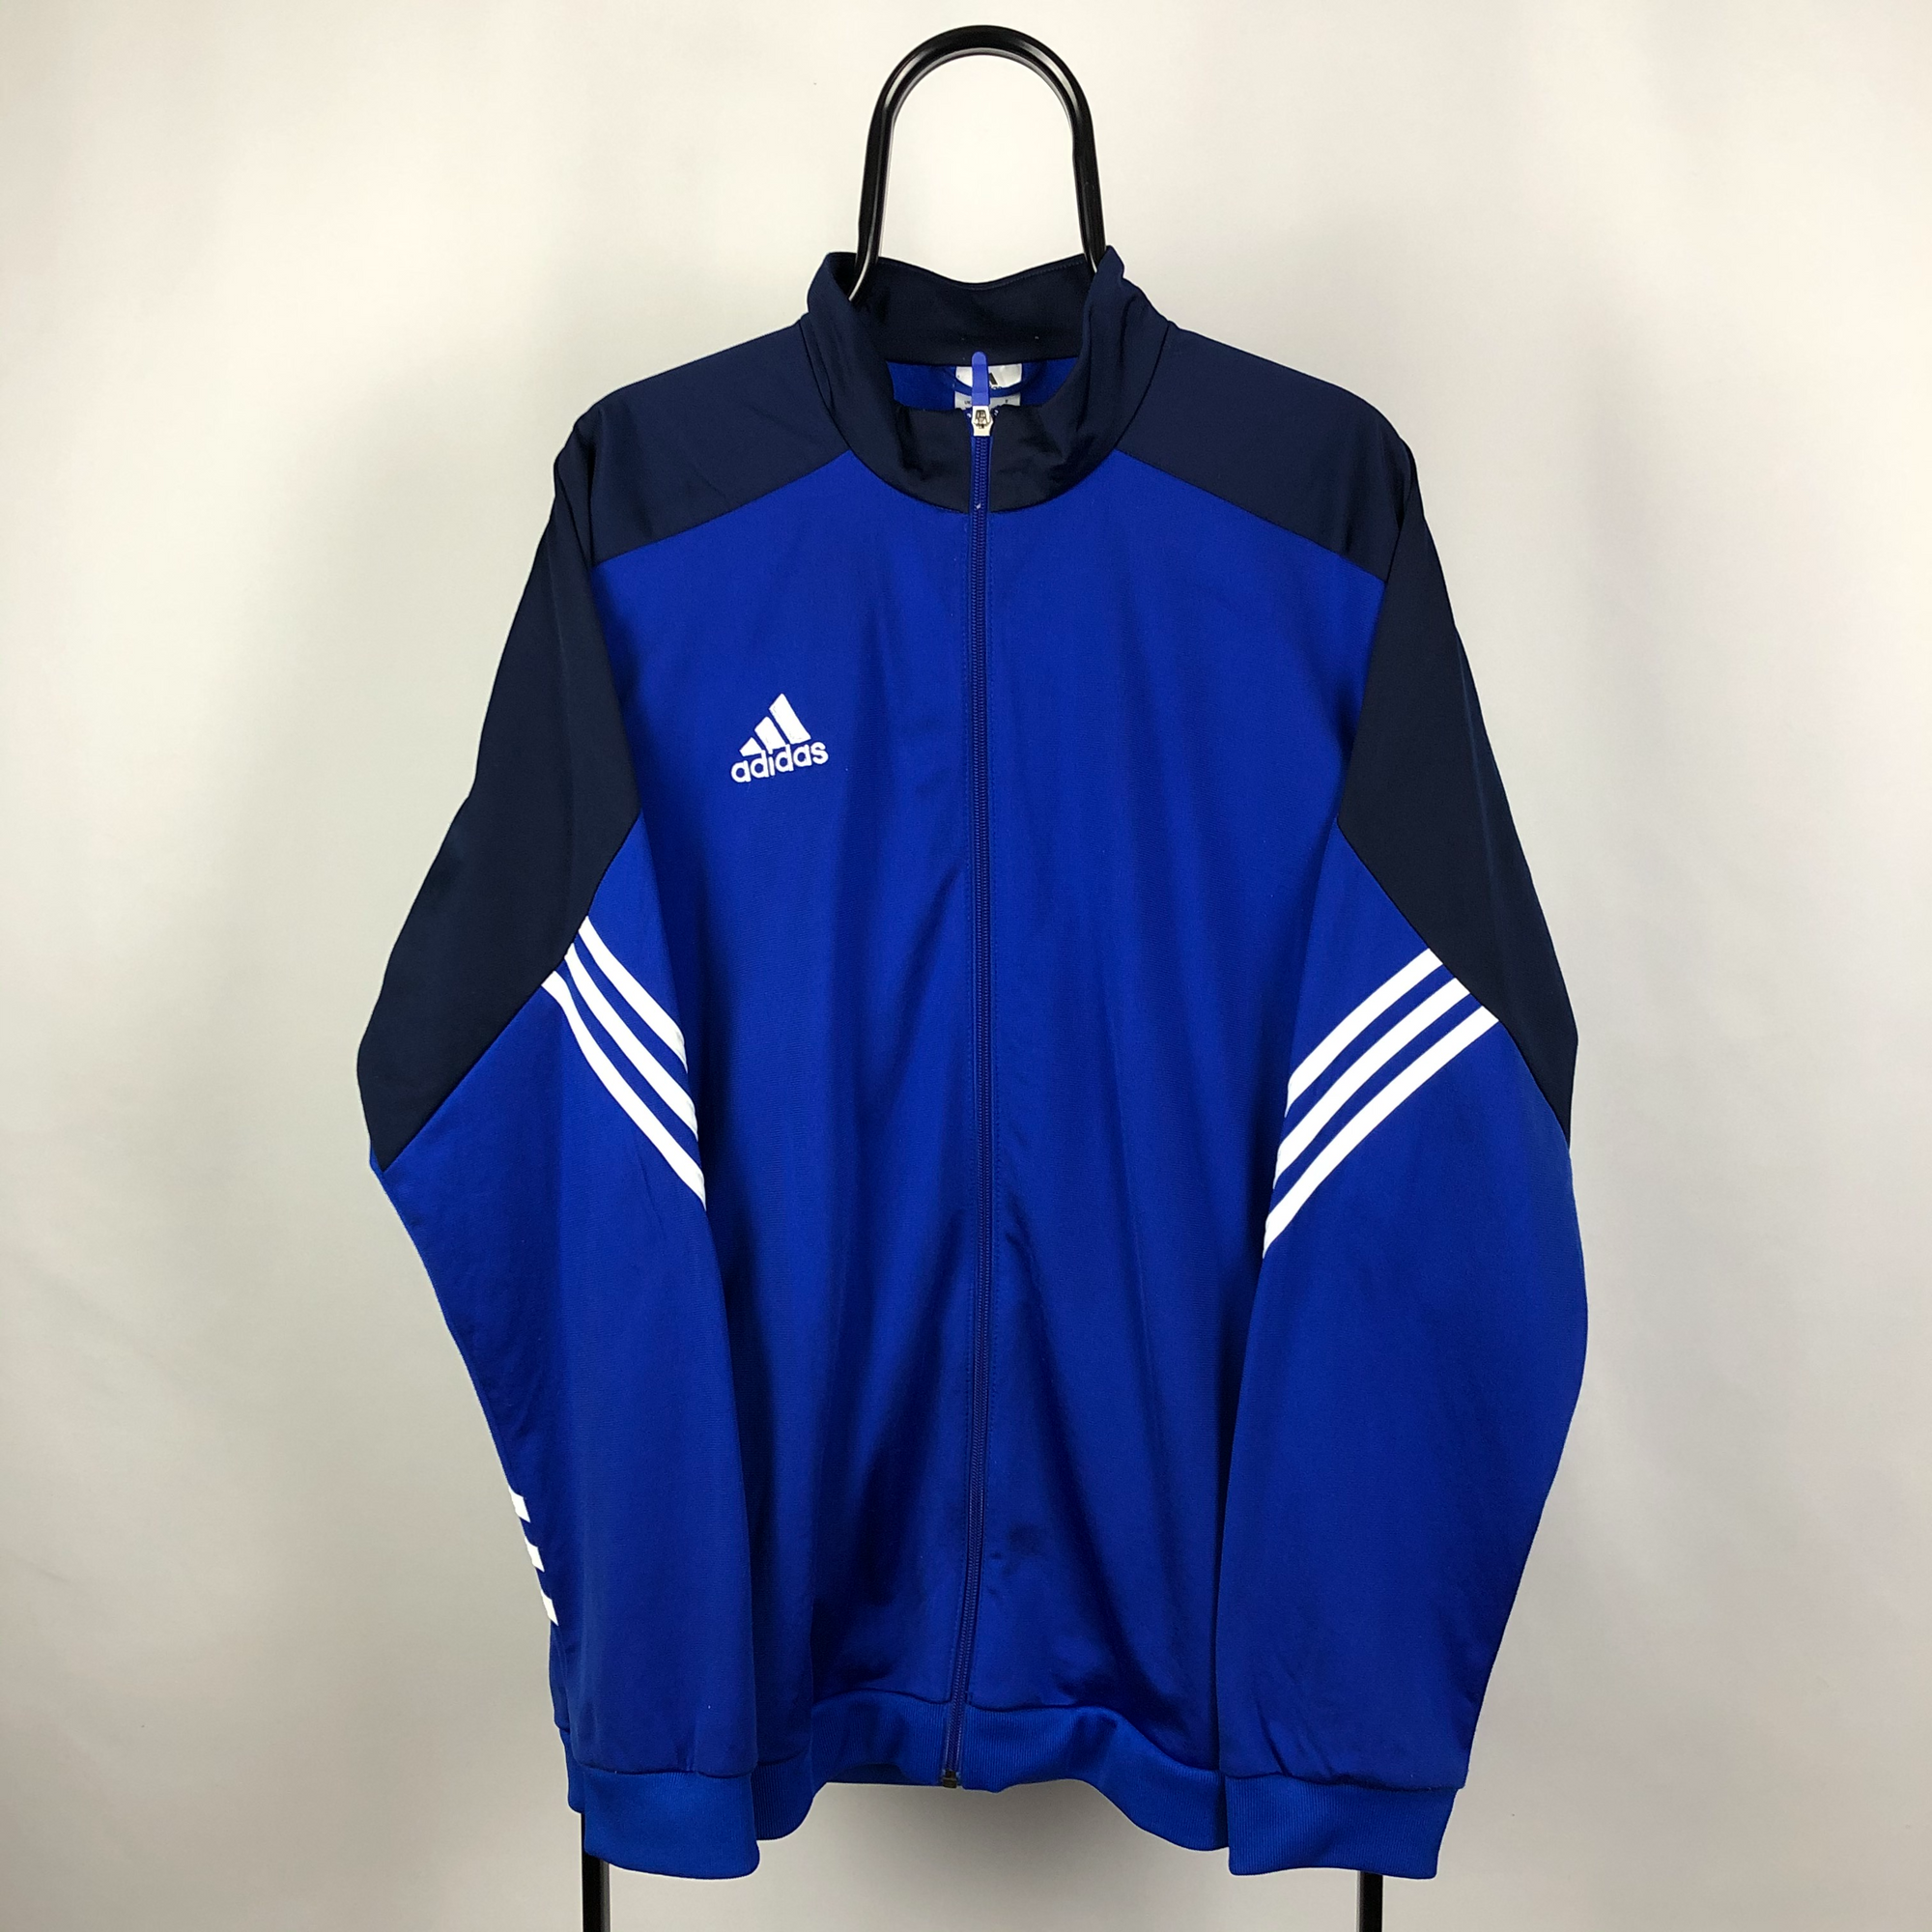 Vintage Adidas Track Jacket in Royal Blue - Men's XL/Women's XXL